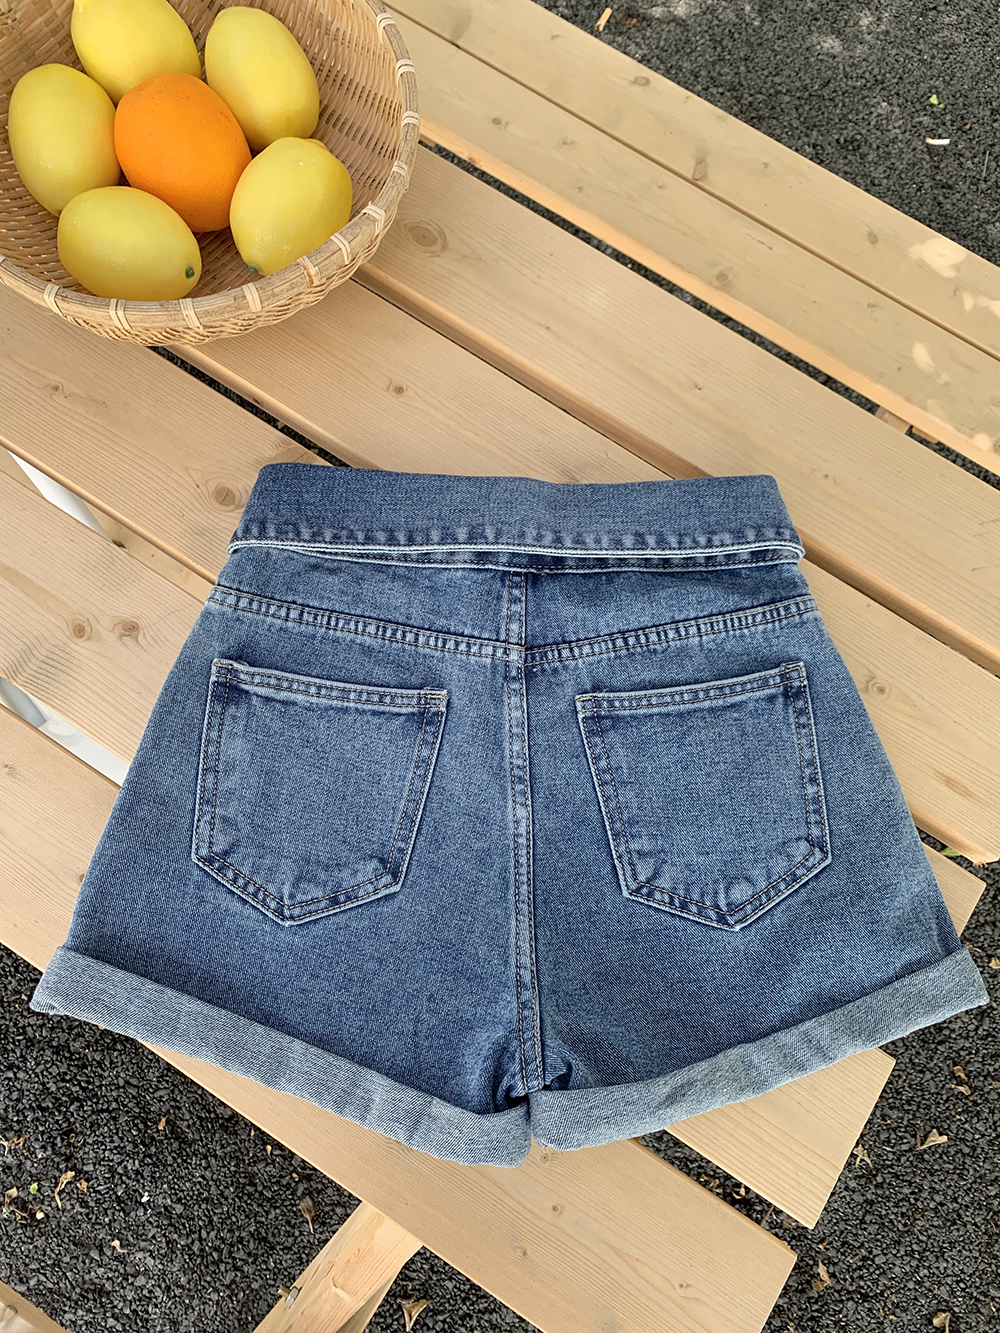 Retro loose jeans summer high waist shorts for women